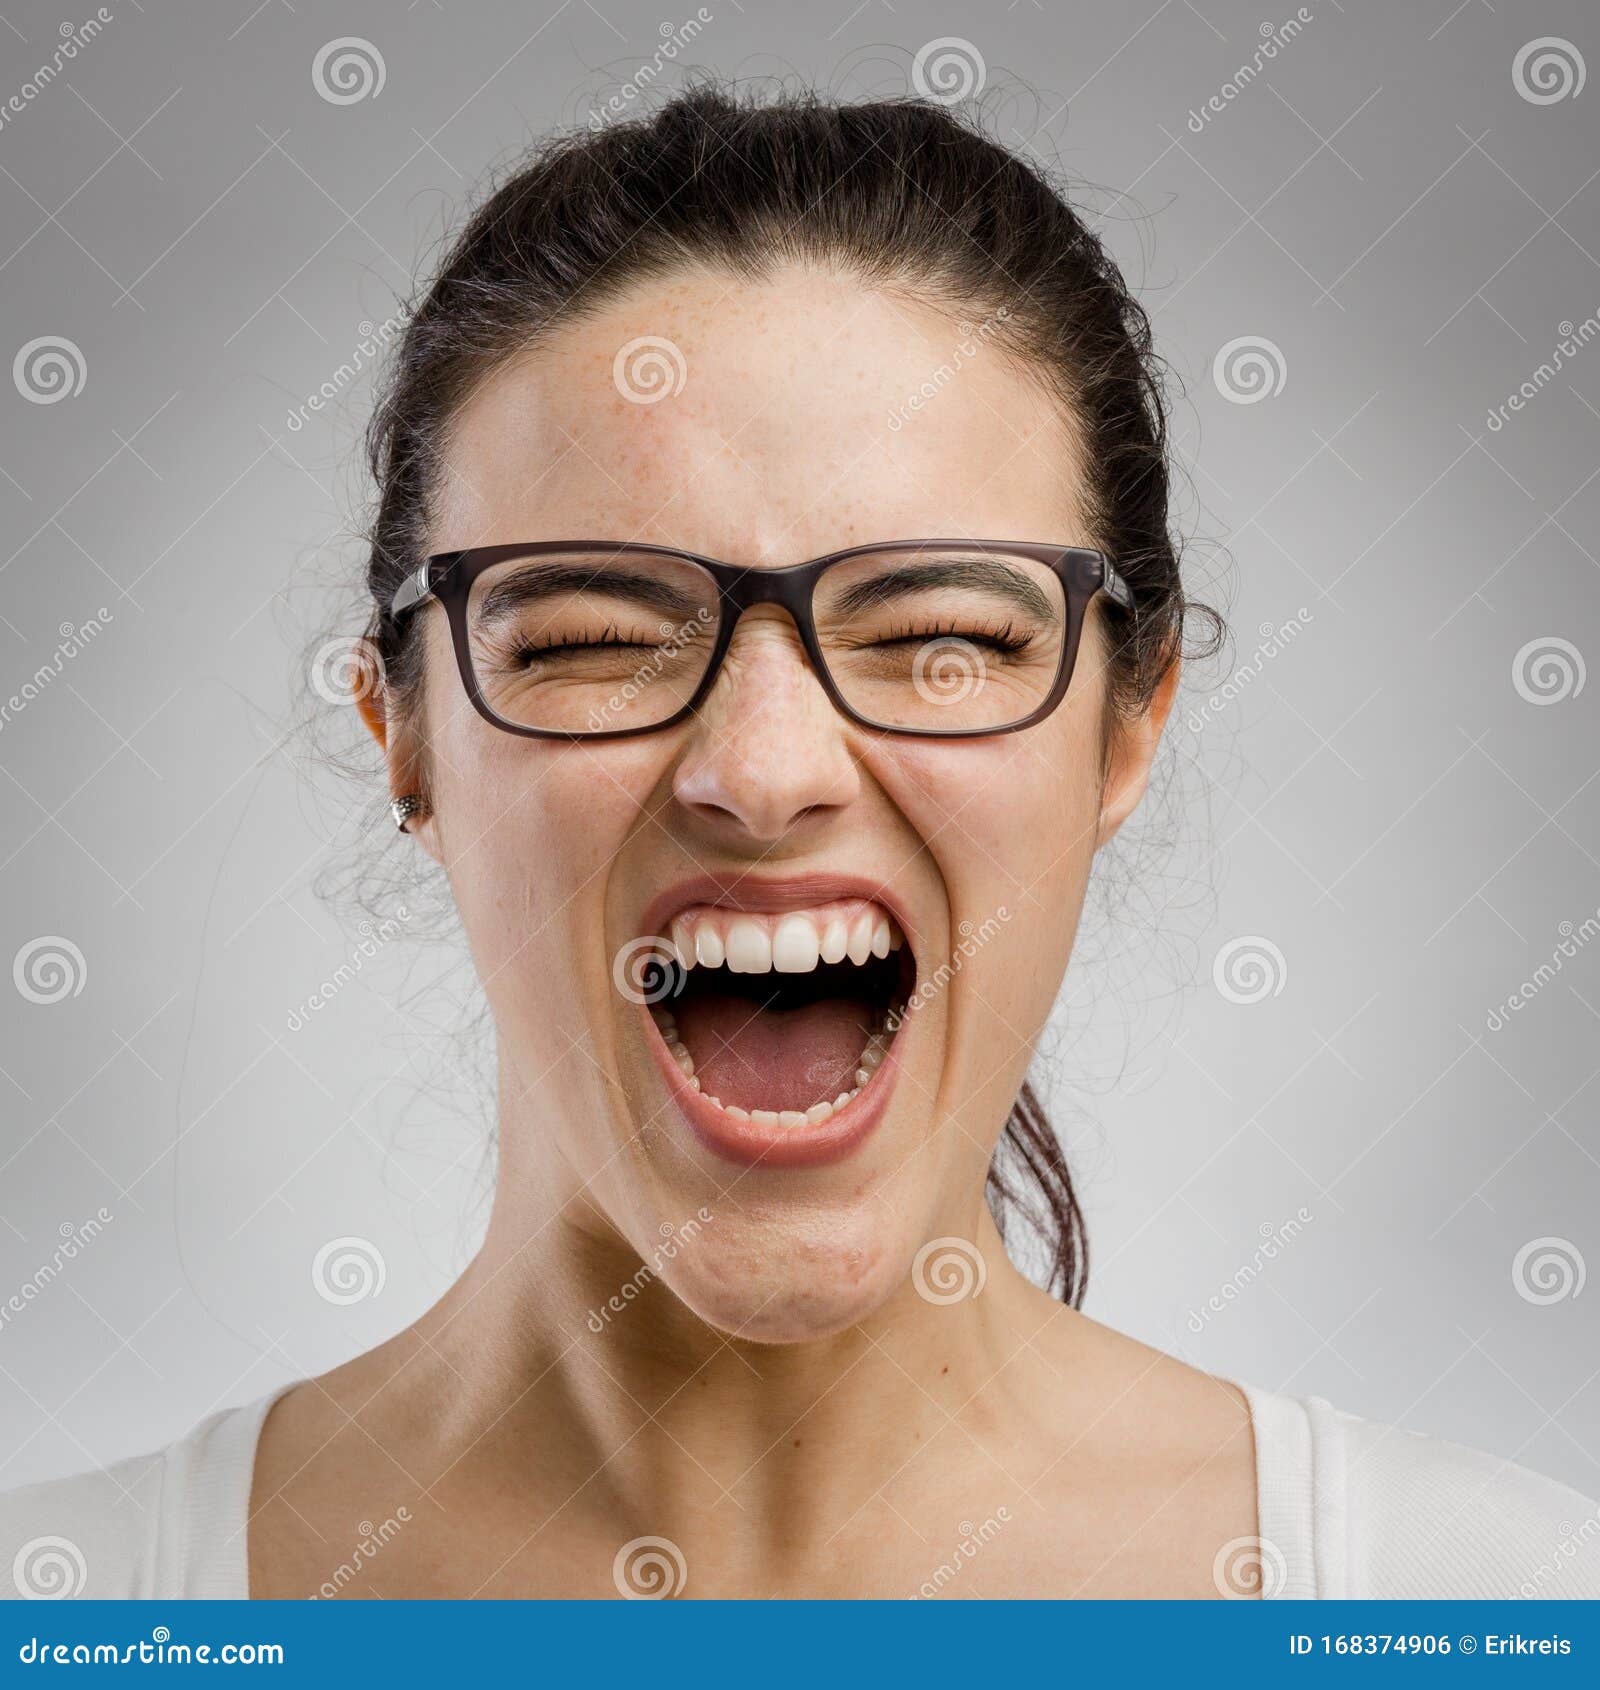 woman yelling on grey background